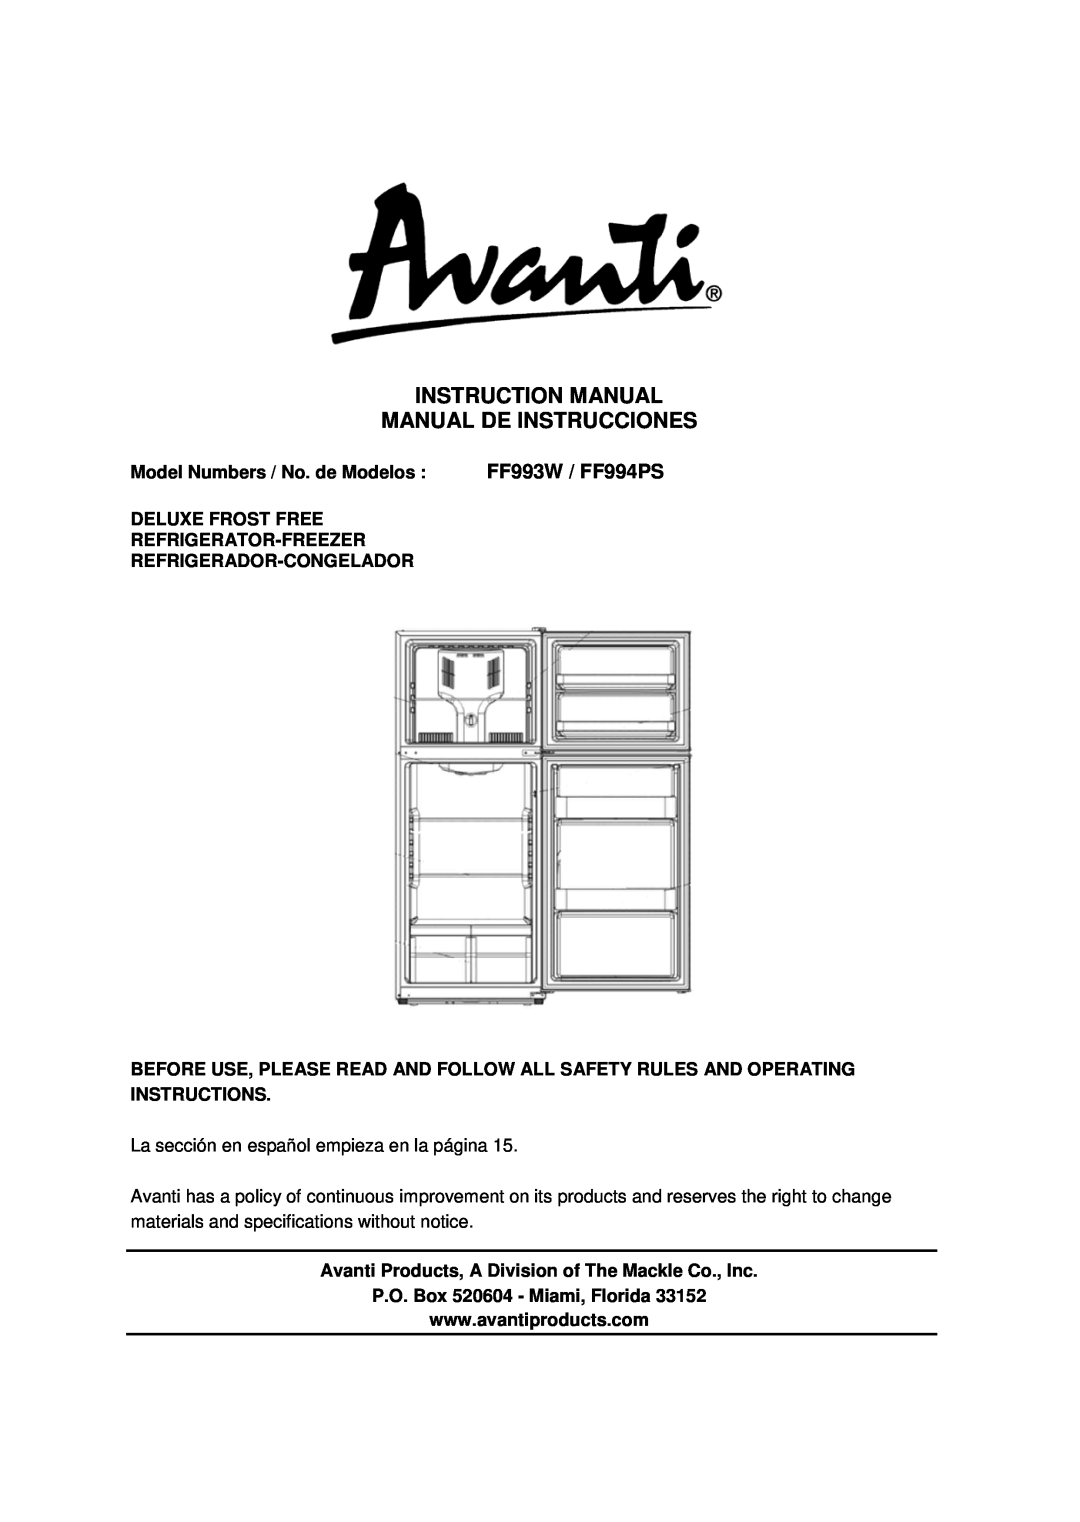 Avanti instruction manual FF993W / FF994PS, Model Numbers / No. de Modelos, Deluxe Frost Free Refrigerator-Freezer 